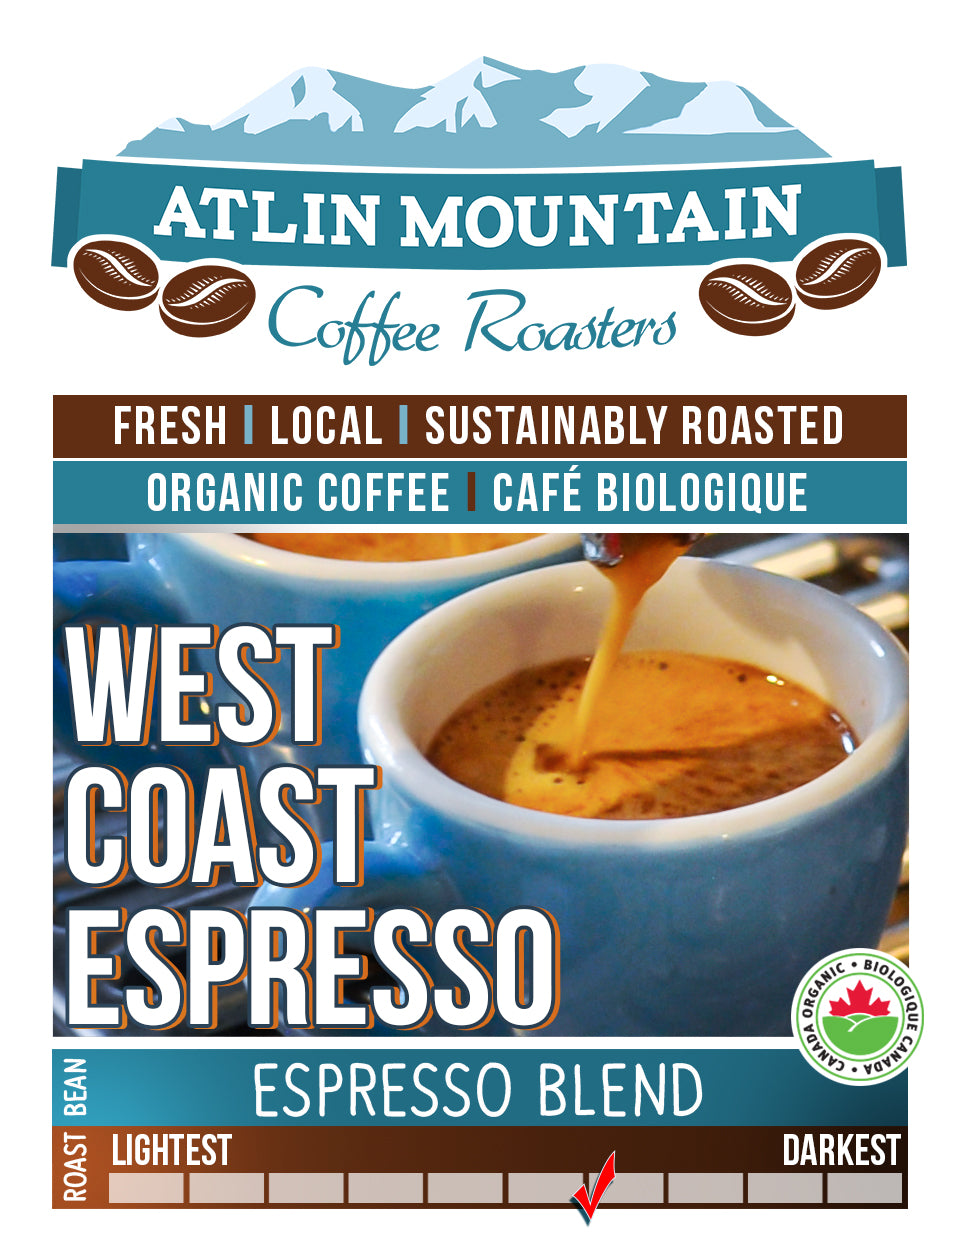 West Coast Espresso - Espresso blend - Multi-origin - atlin-mountain-coffee